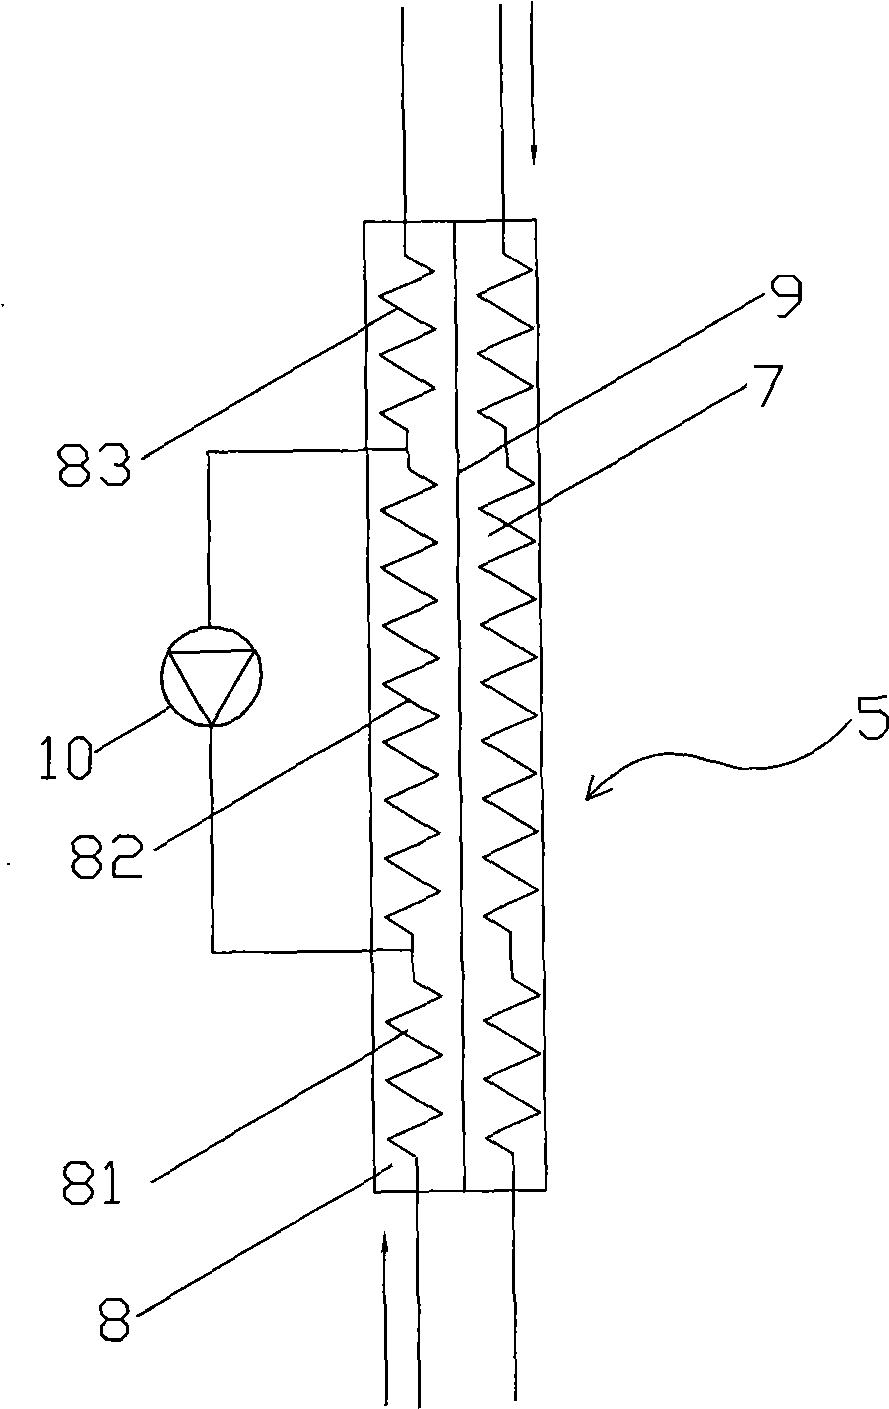 Three segment type heat exchanger